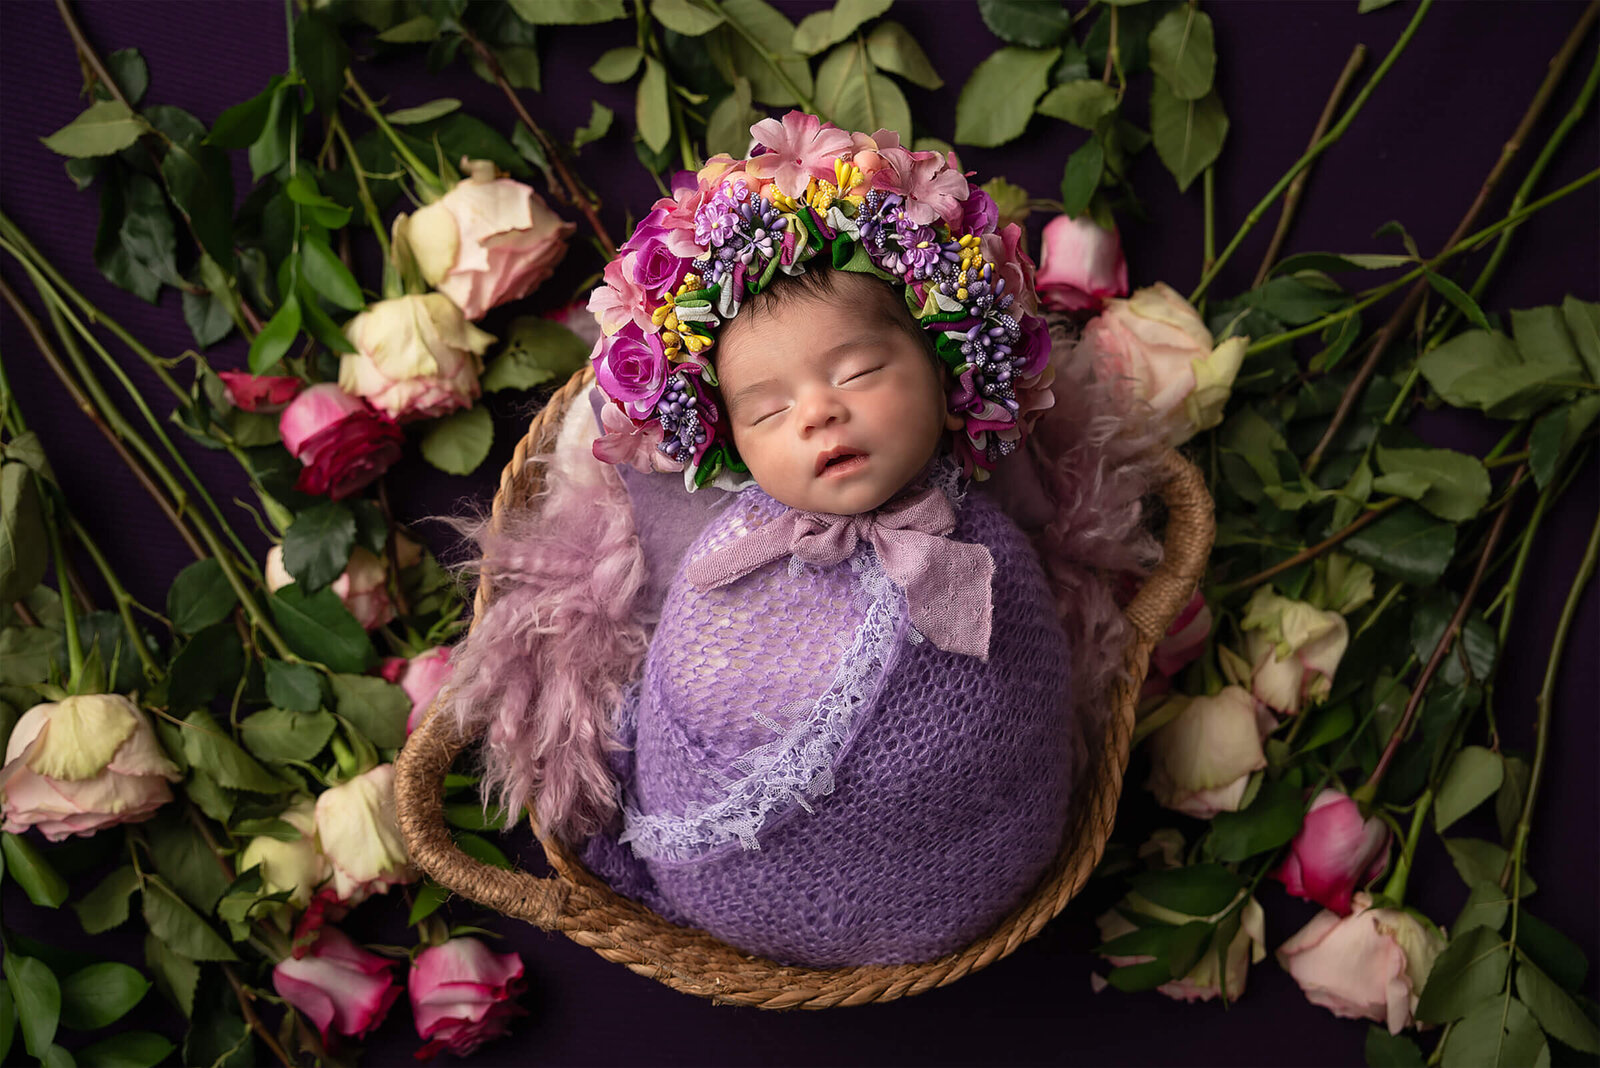 Newborn laying in flowers